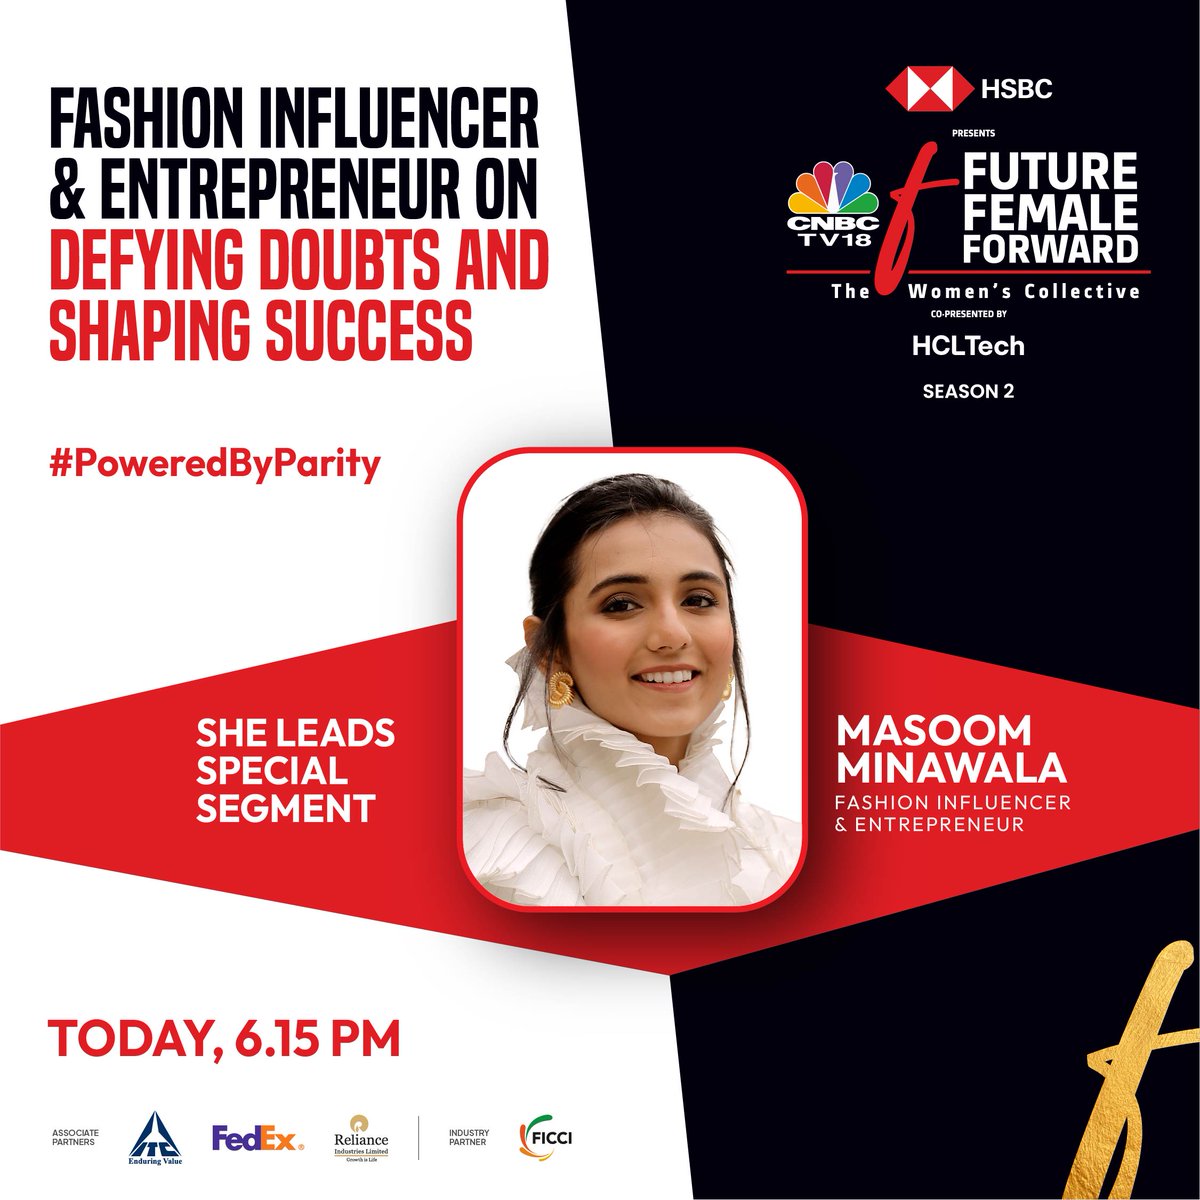 Catch an exclusive conversation with Fashion Influencer & Entrepreneur Masoom Minawala on CNBC-TV18's Future. Female. Forward - The Women's Collective, today at 6.15 PM  

@Zenia171996 @MasoomMinawala @ITCCorpCom @FedExIndia @ficci_india 
#FutureFemaleForward #Season2…